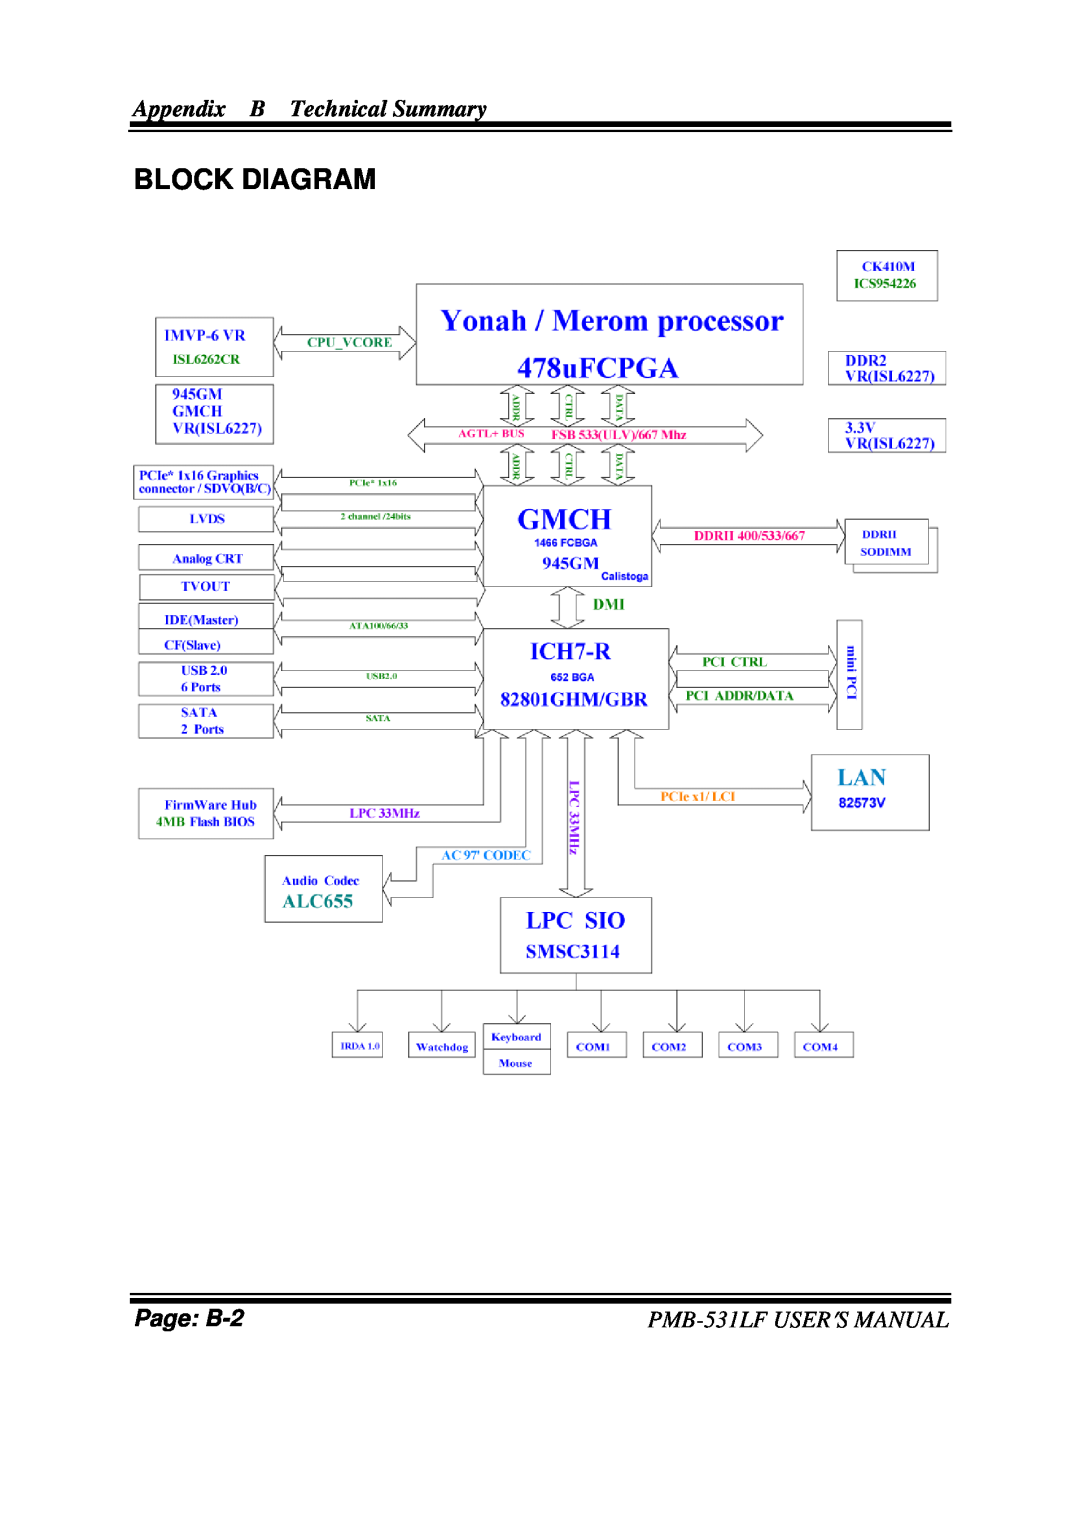 Intel user manual Block Diagram, Page B-2, Appendix B Technical Summary, PMB-531LFUSER′S MANUAL 